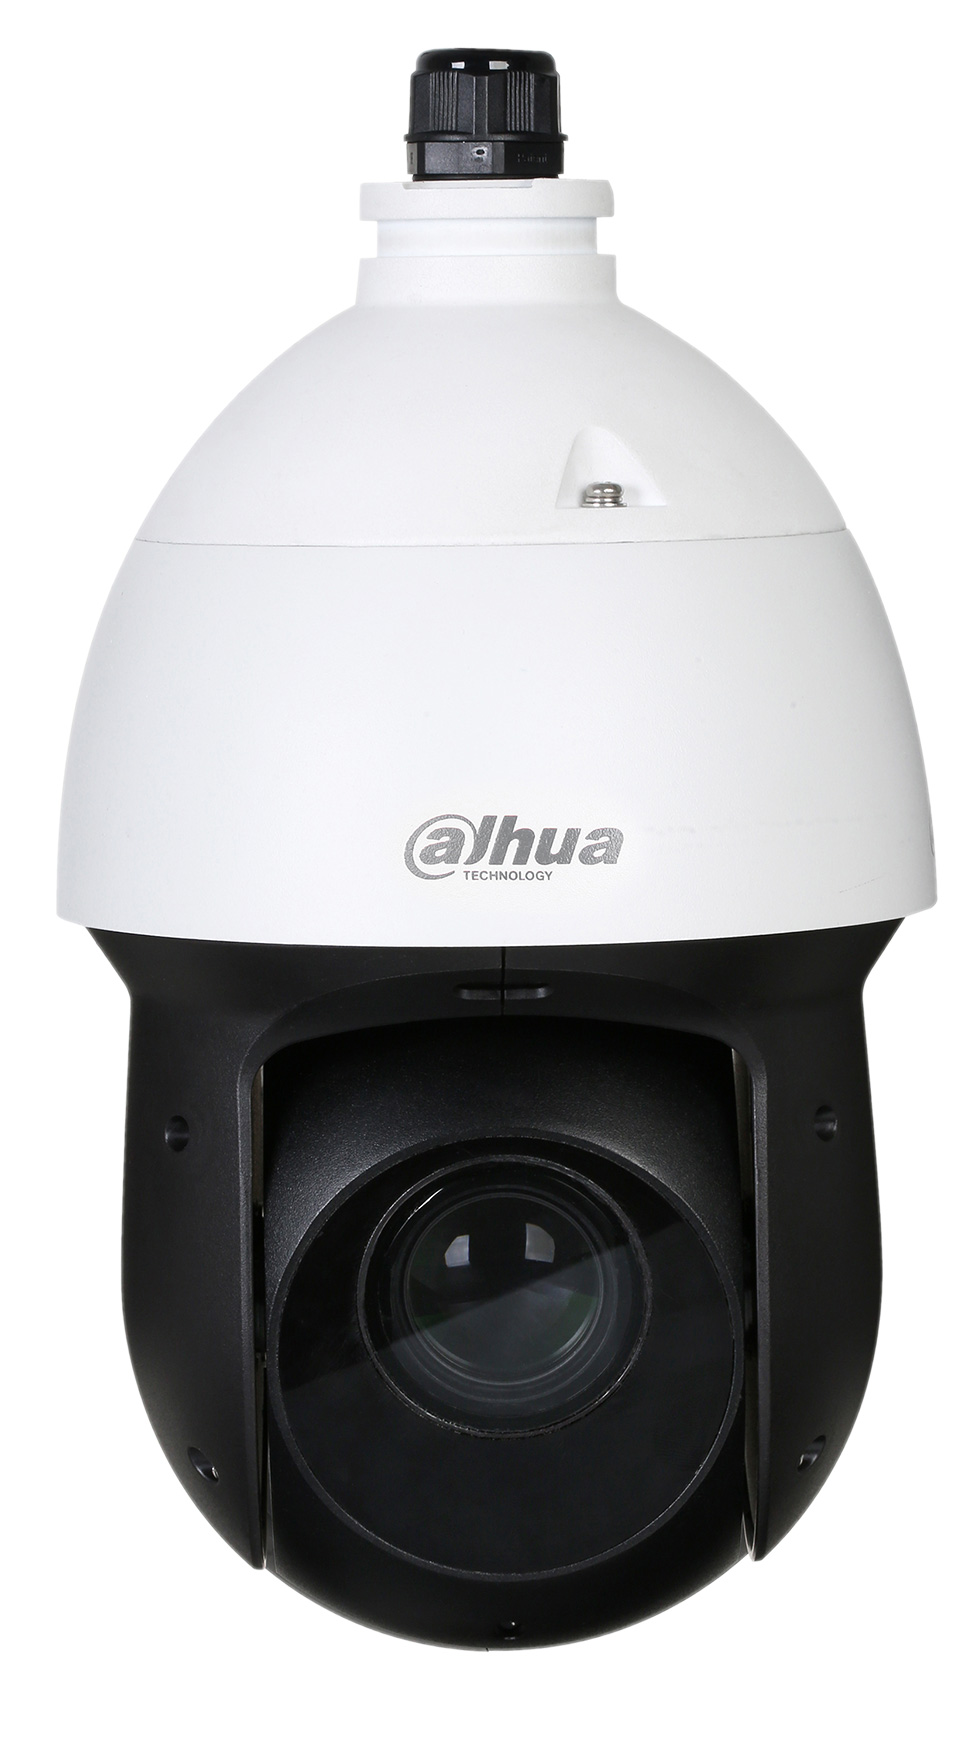 Dahua IPC-SD49425GB-HNR kamera